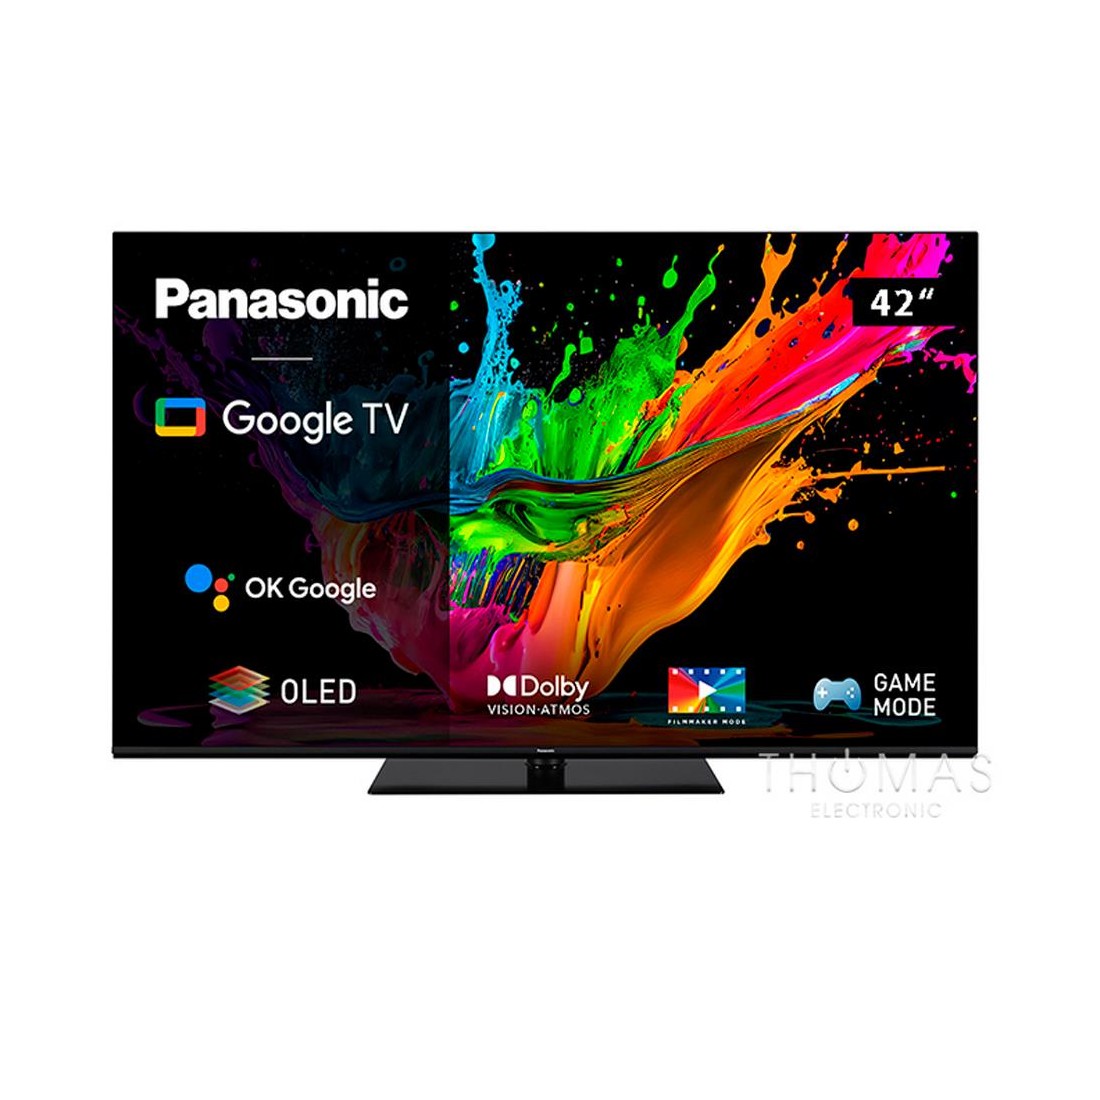 TV OLED - Panasonic TX-42MZ800E, 42 pulgadas,4K HDR, Procesador